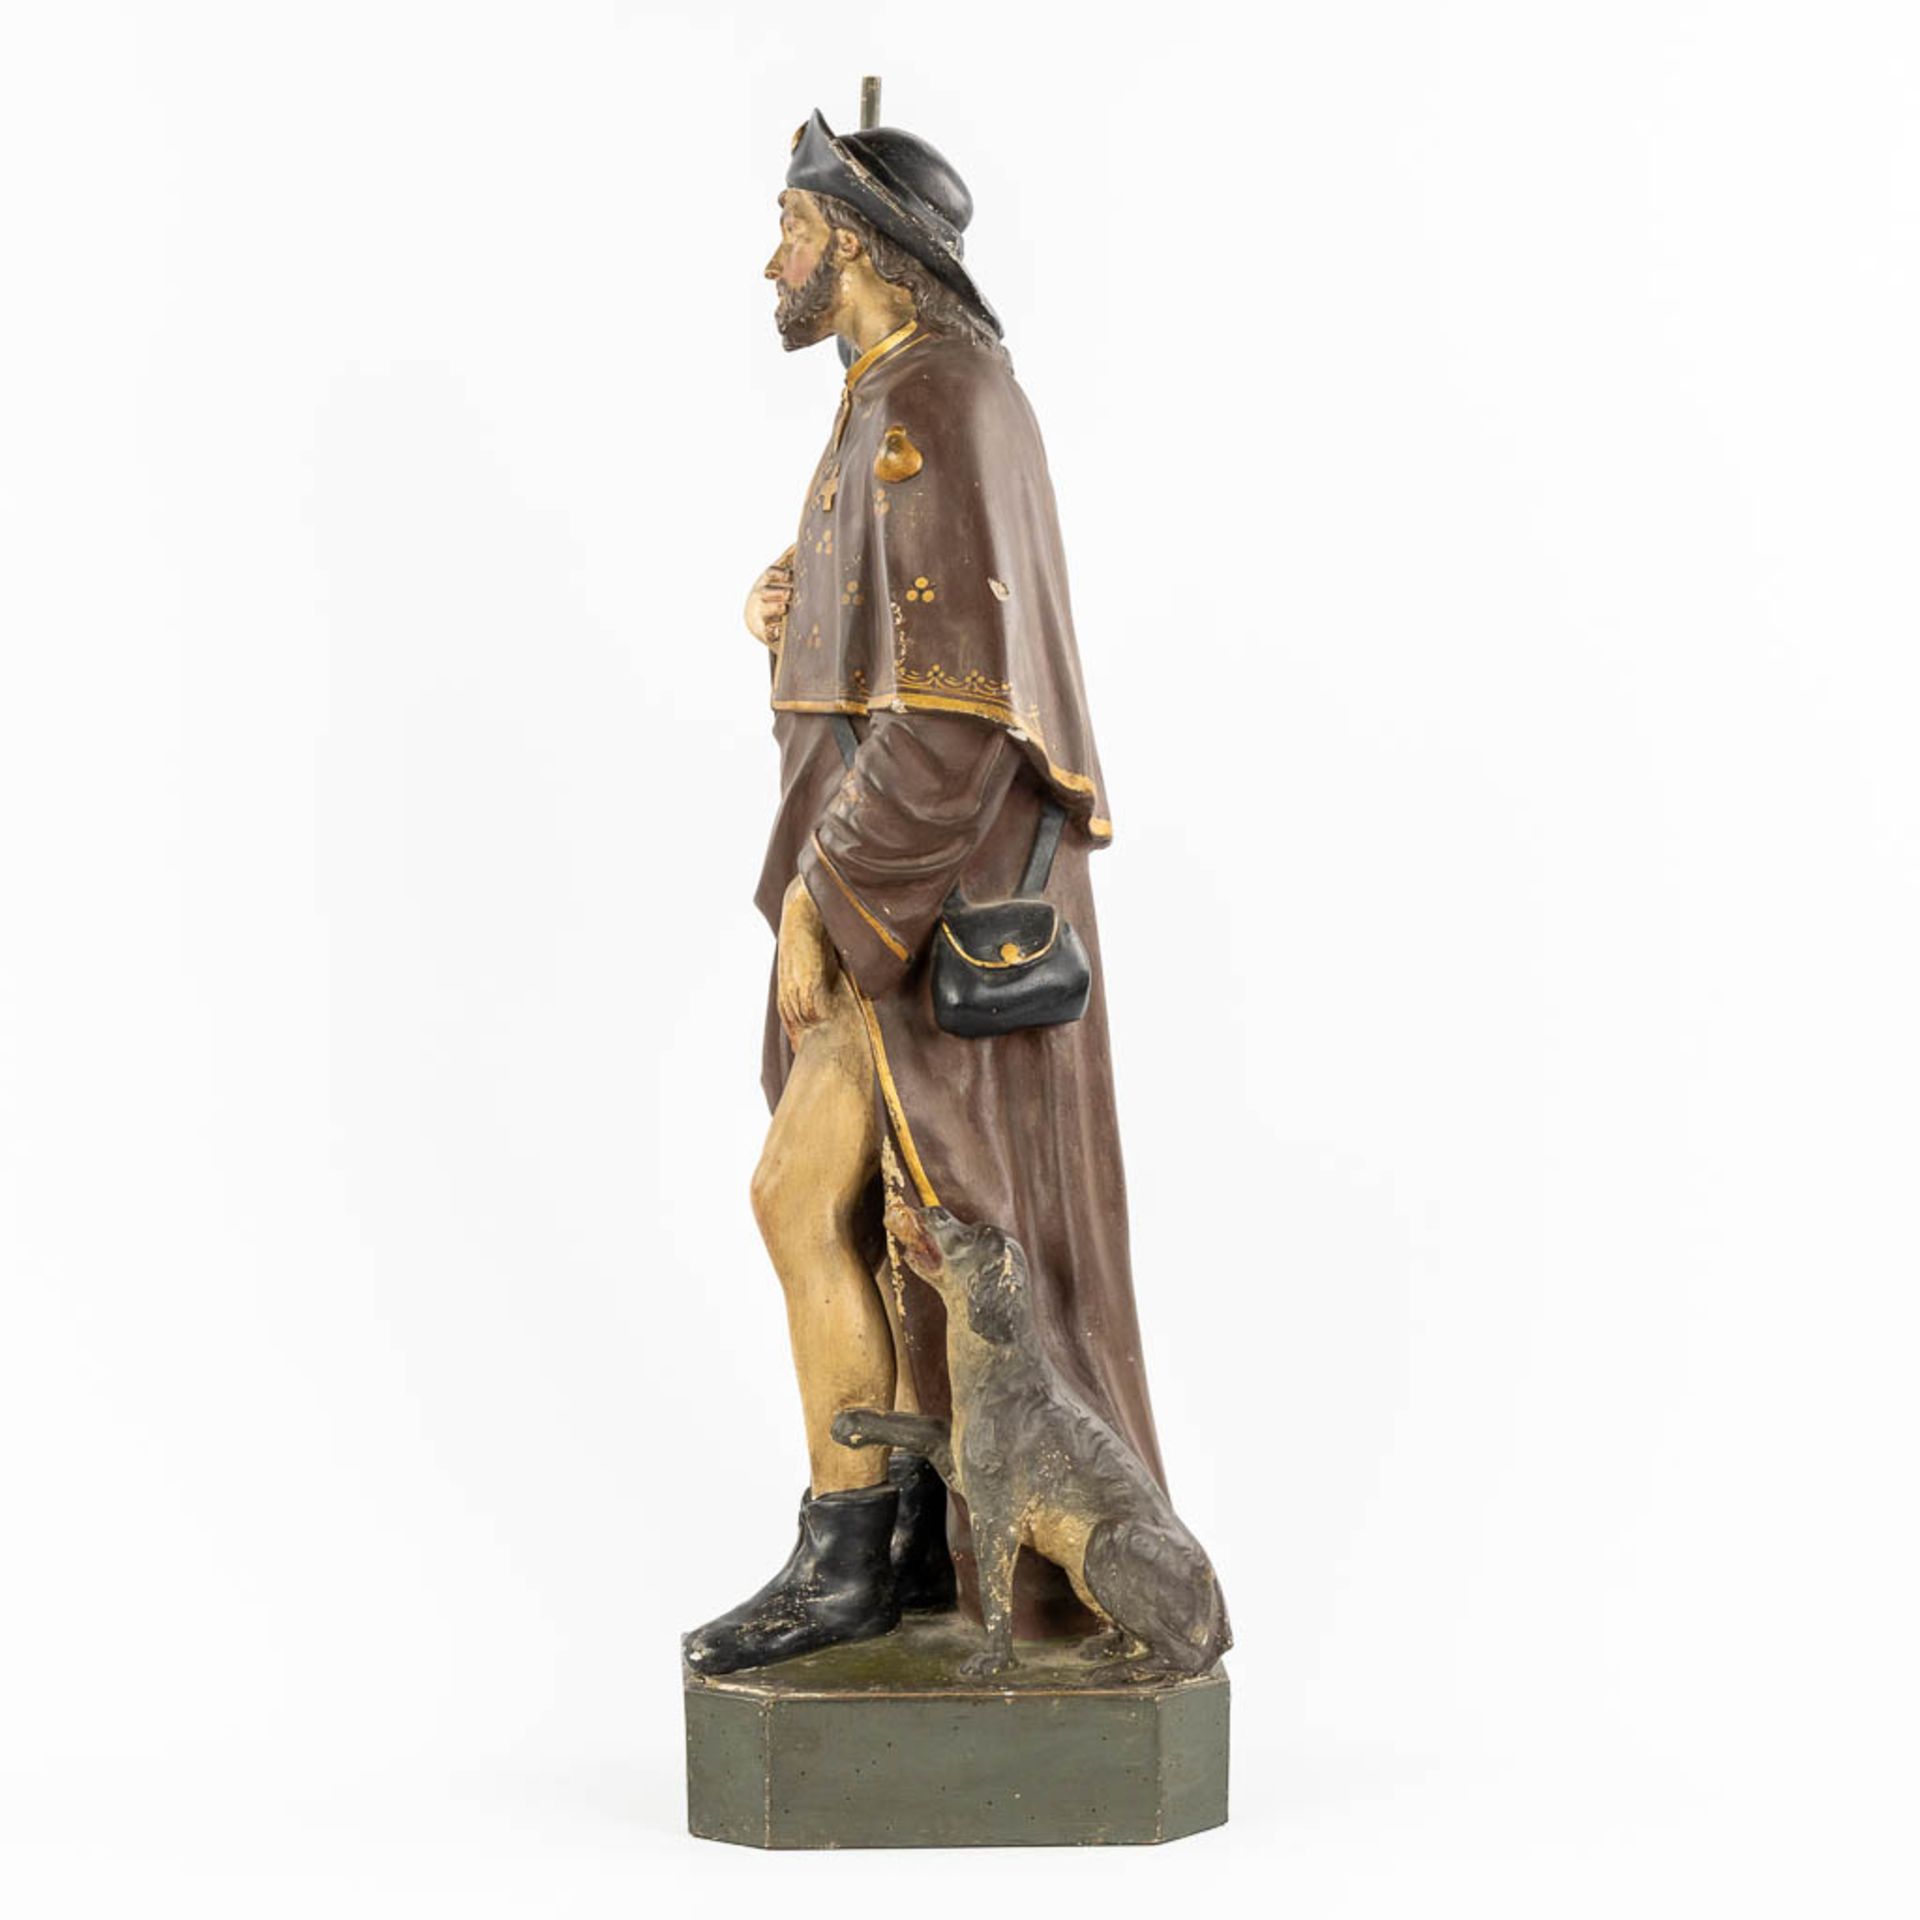 An antique figurine of Saint Rochus, patinated plaster. Circa 1900. (L:27 x W:27 x H:88 cm) - Image 4 of 16